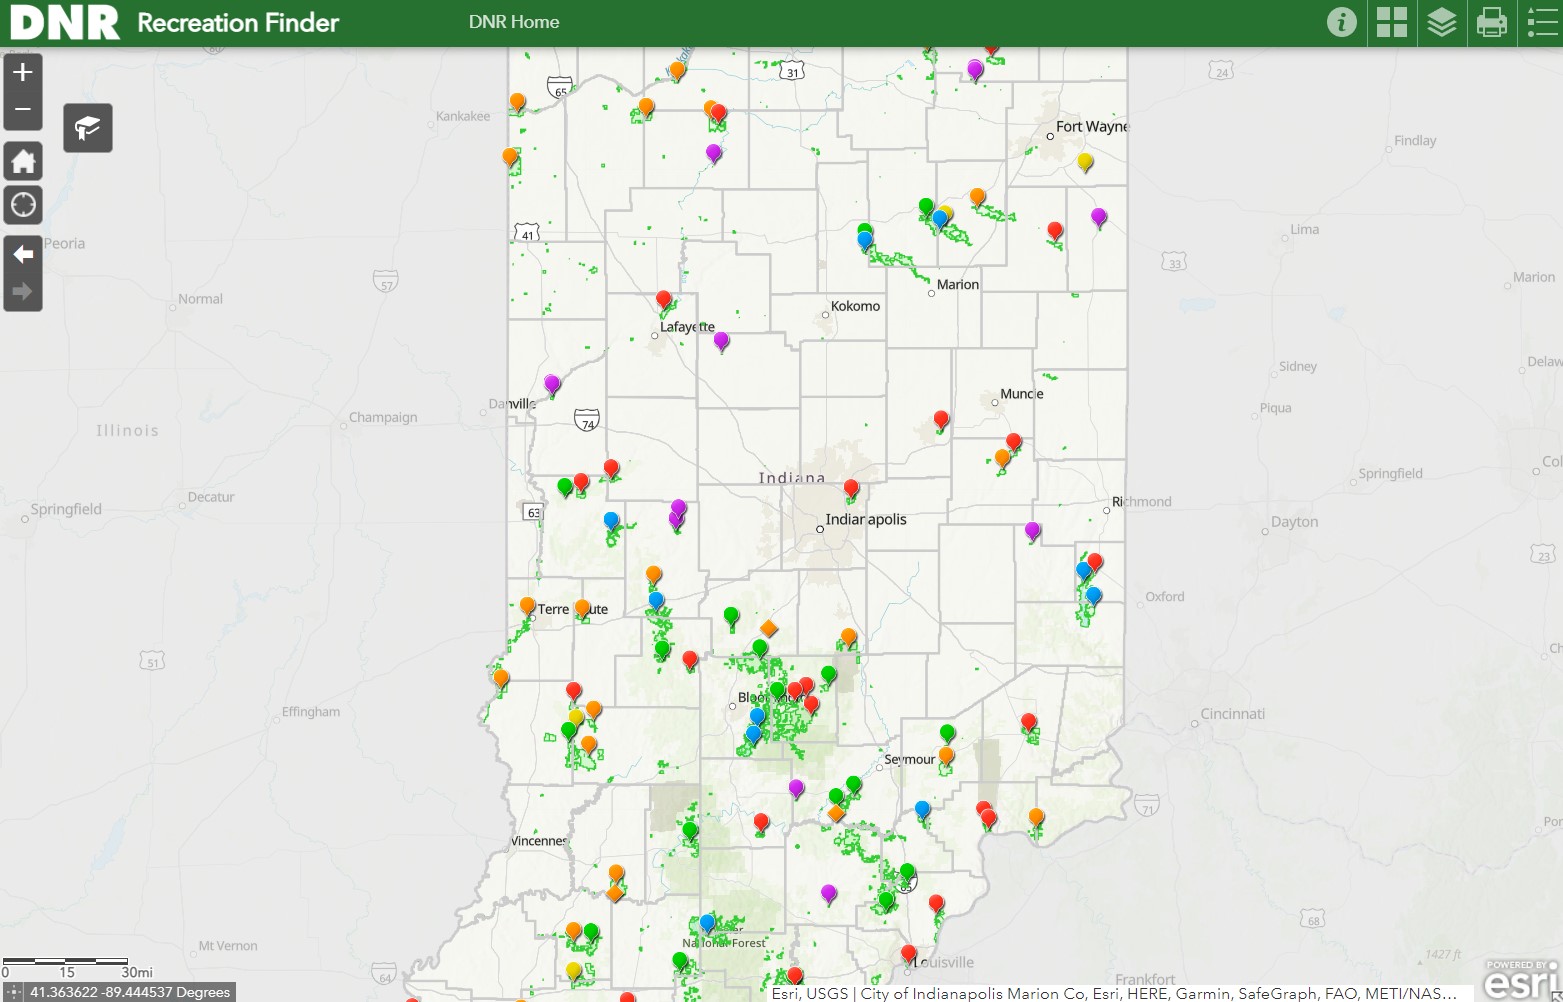 DNR: Indiana DNR Locations